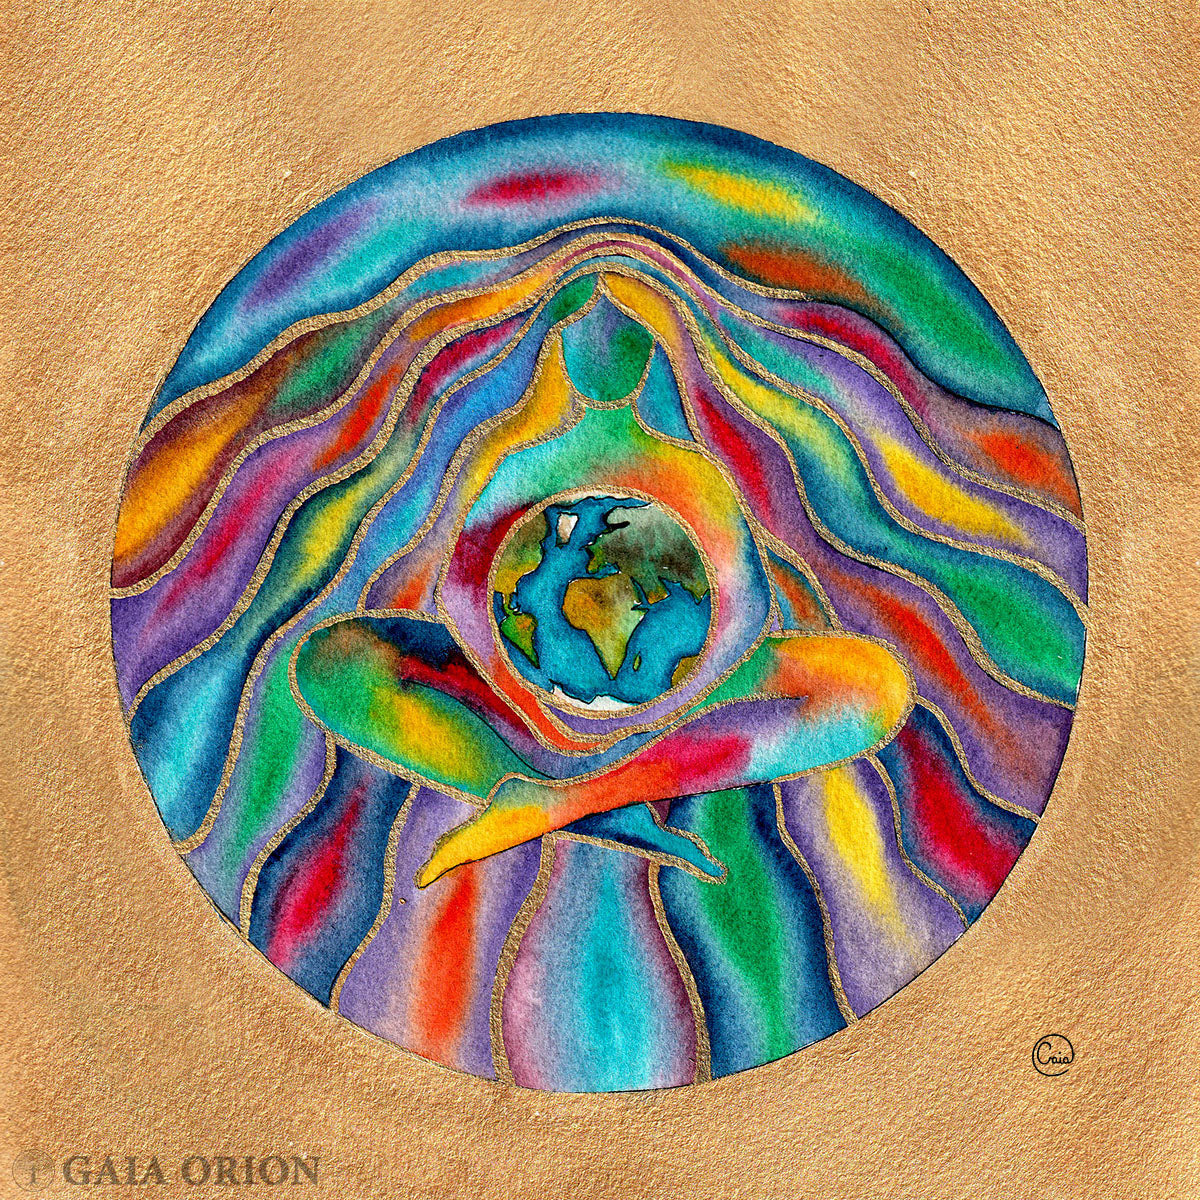 Earth Healing - Watercolour 20 x 20 cm - Gaia Orion Art